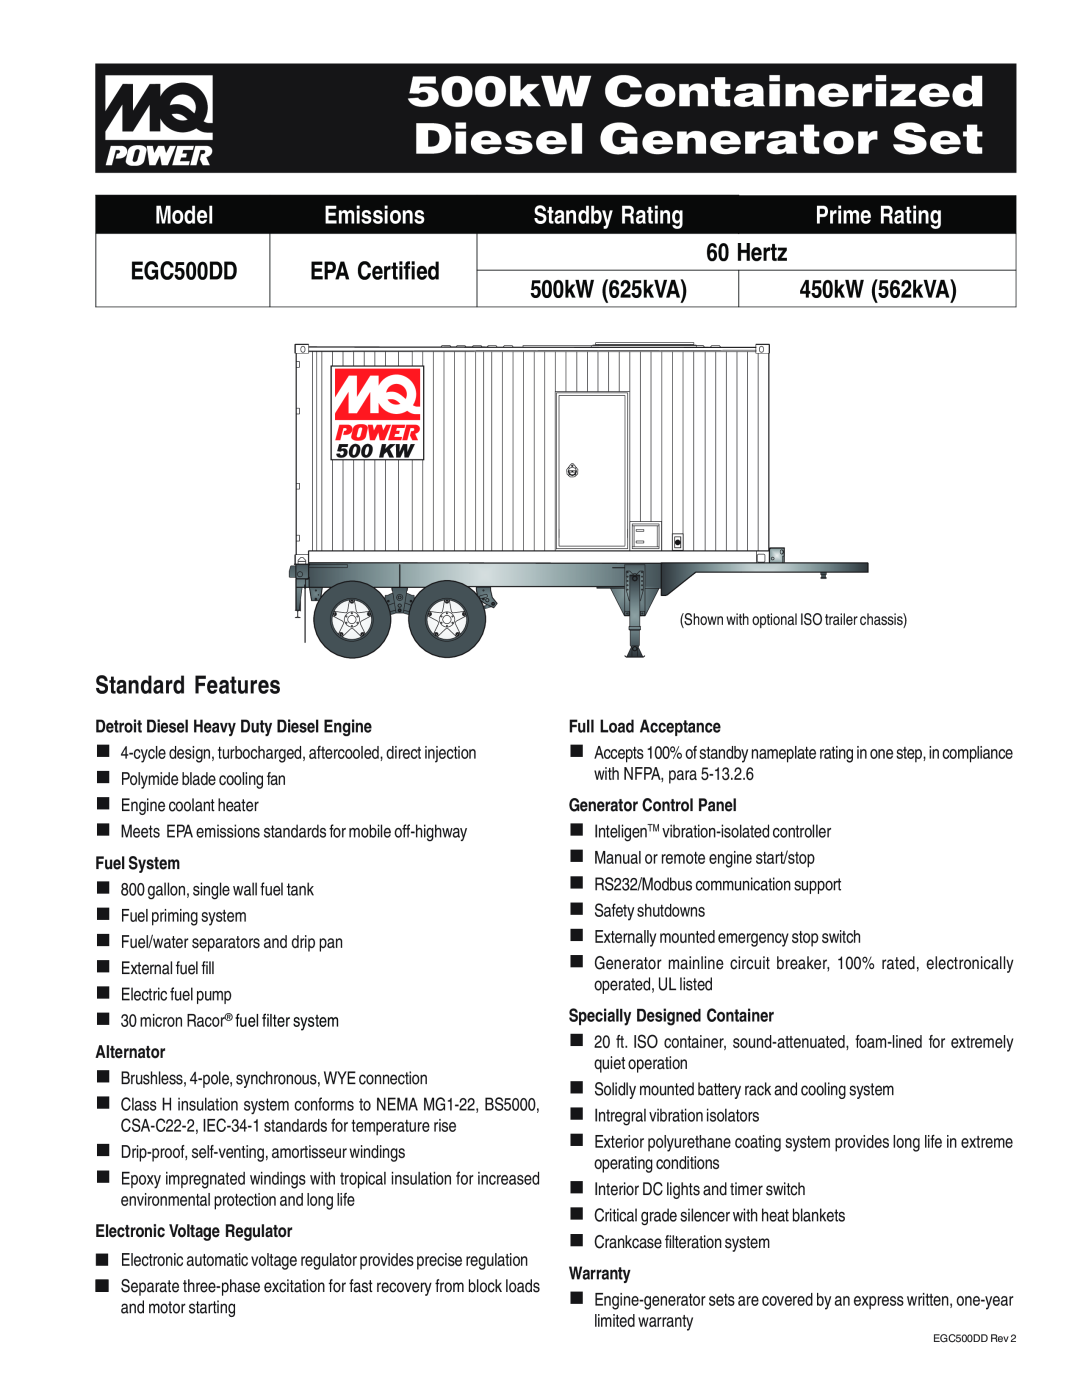 Multiquip EGC500DD warranty 500kW Containerized Diesel Generator Set, Hertz, Standard Features, Model, Emissions, Warranty 